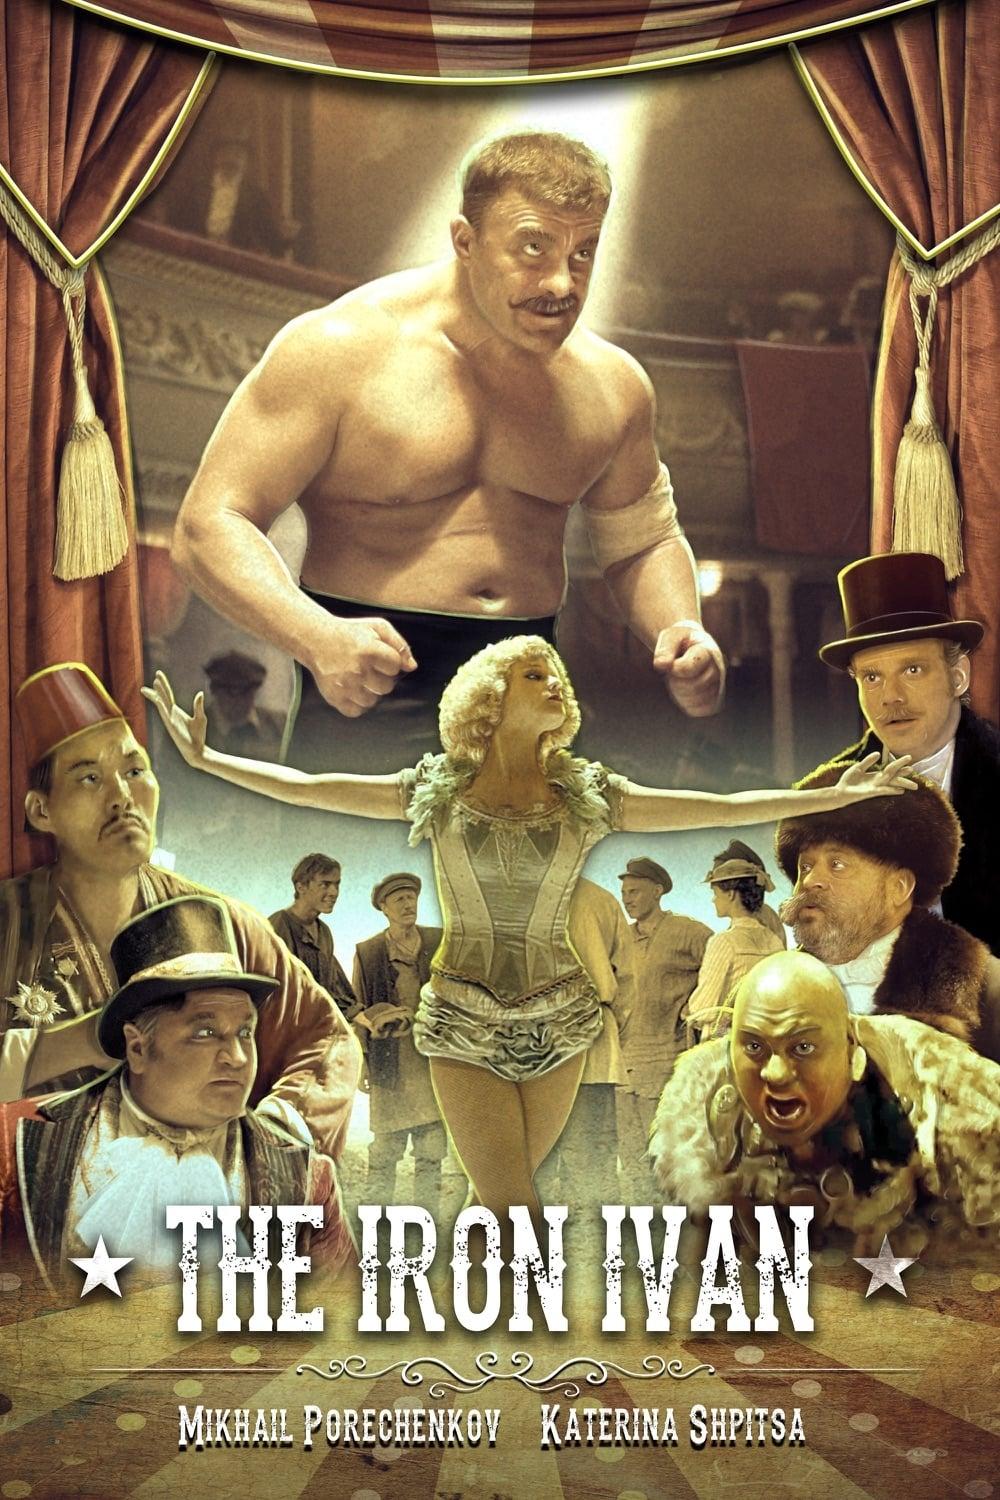 The Iron Ivan poster